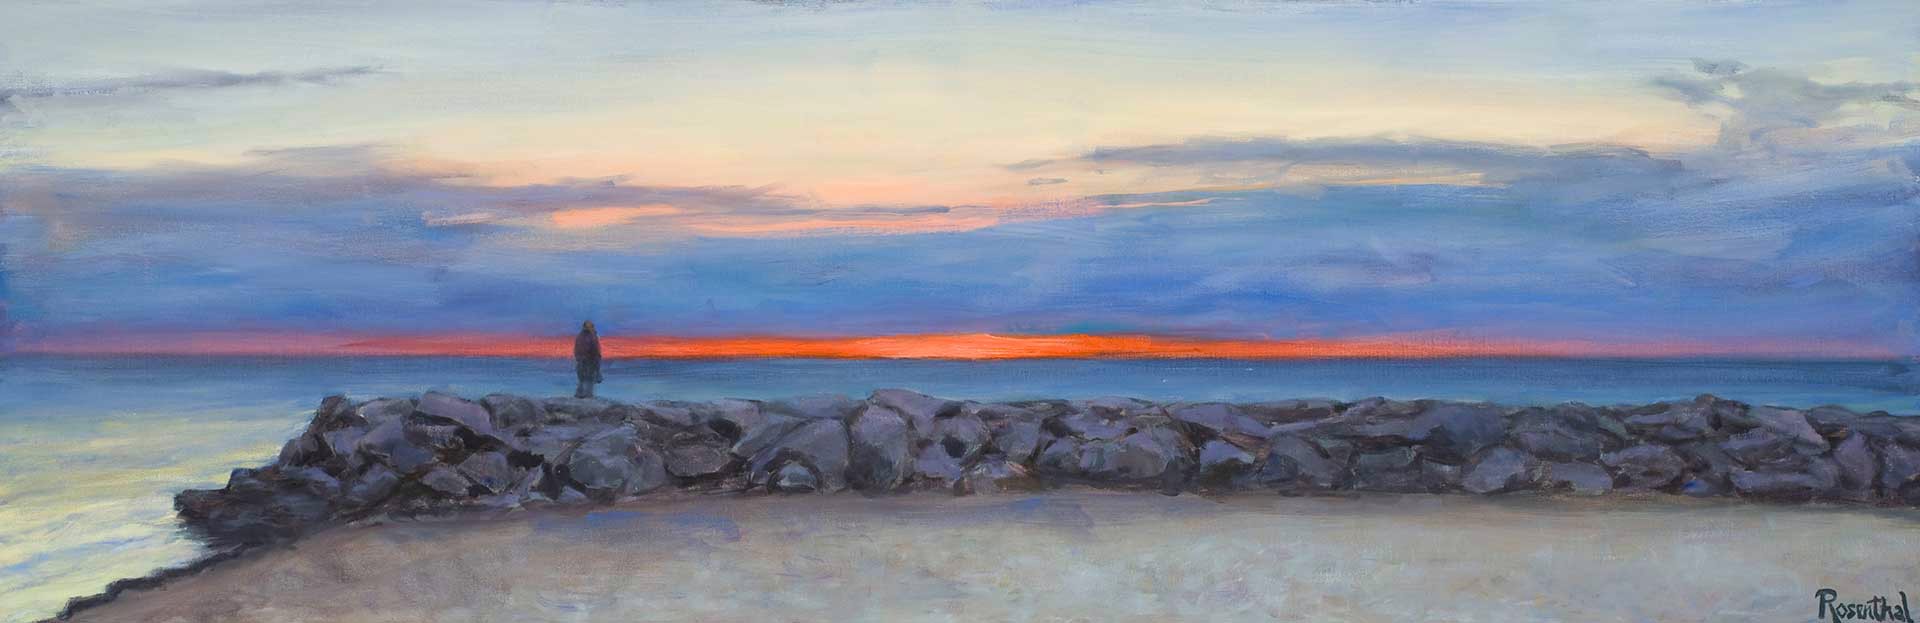 Sunset on Long Island Sound by Sam Rosenthal